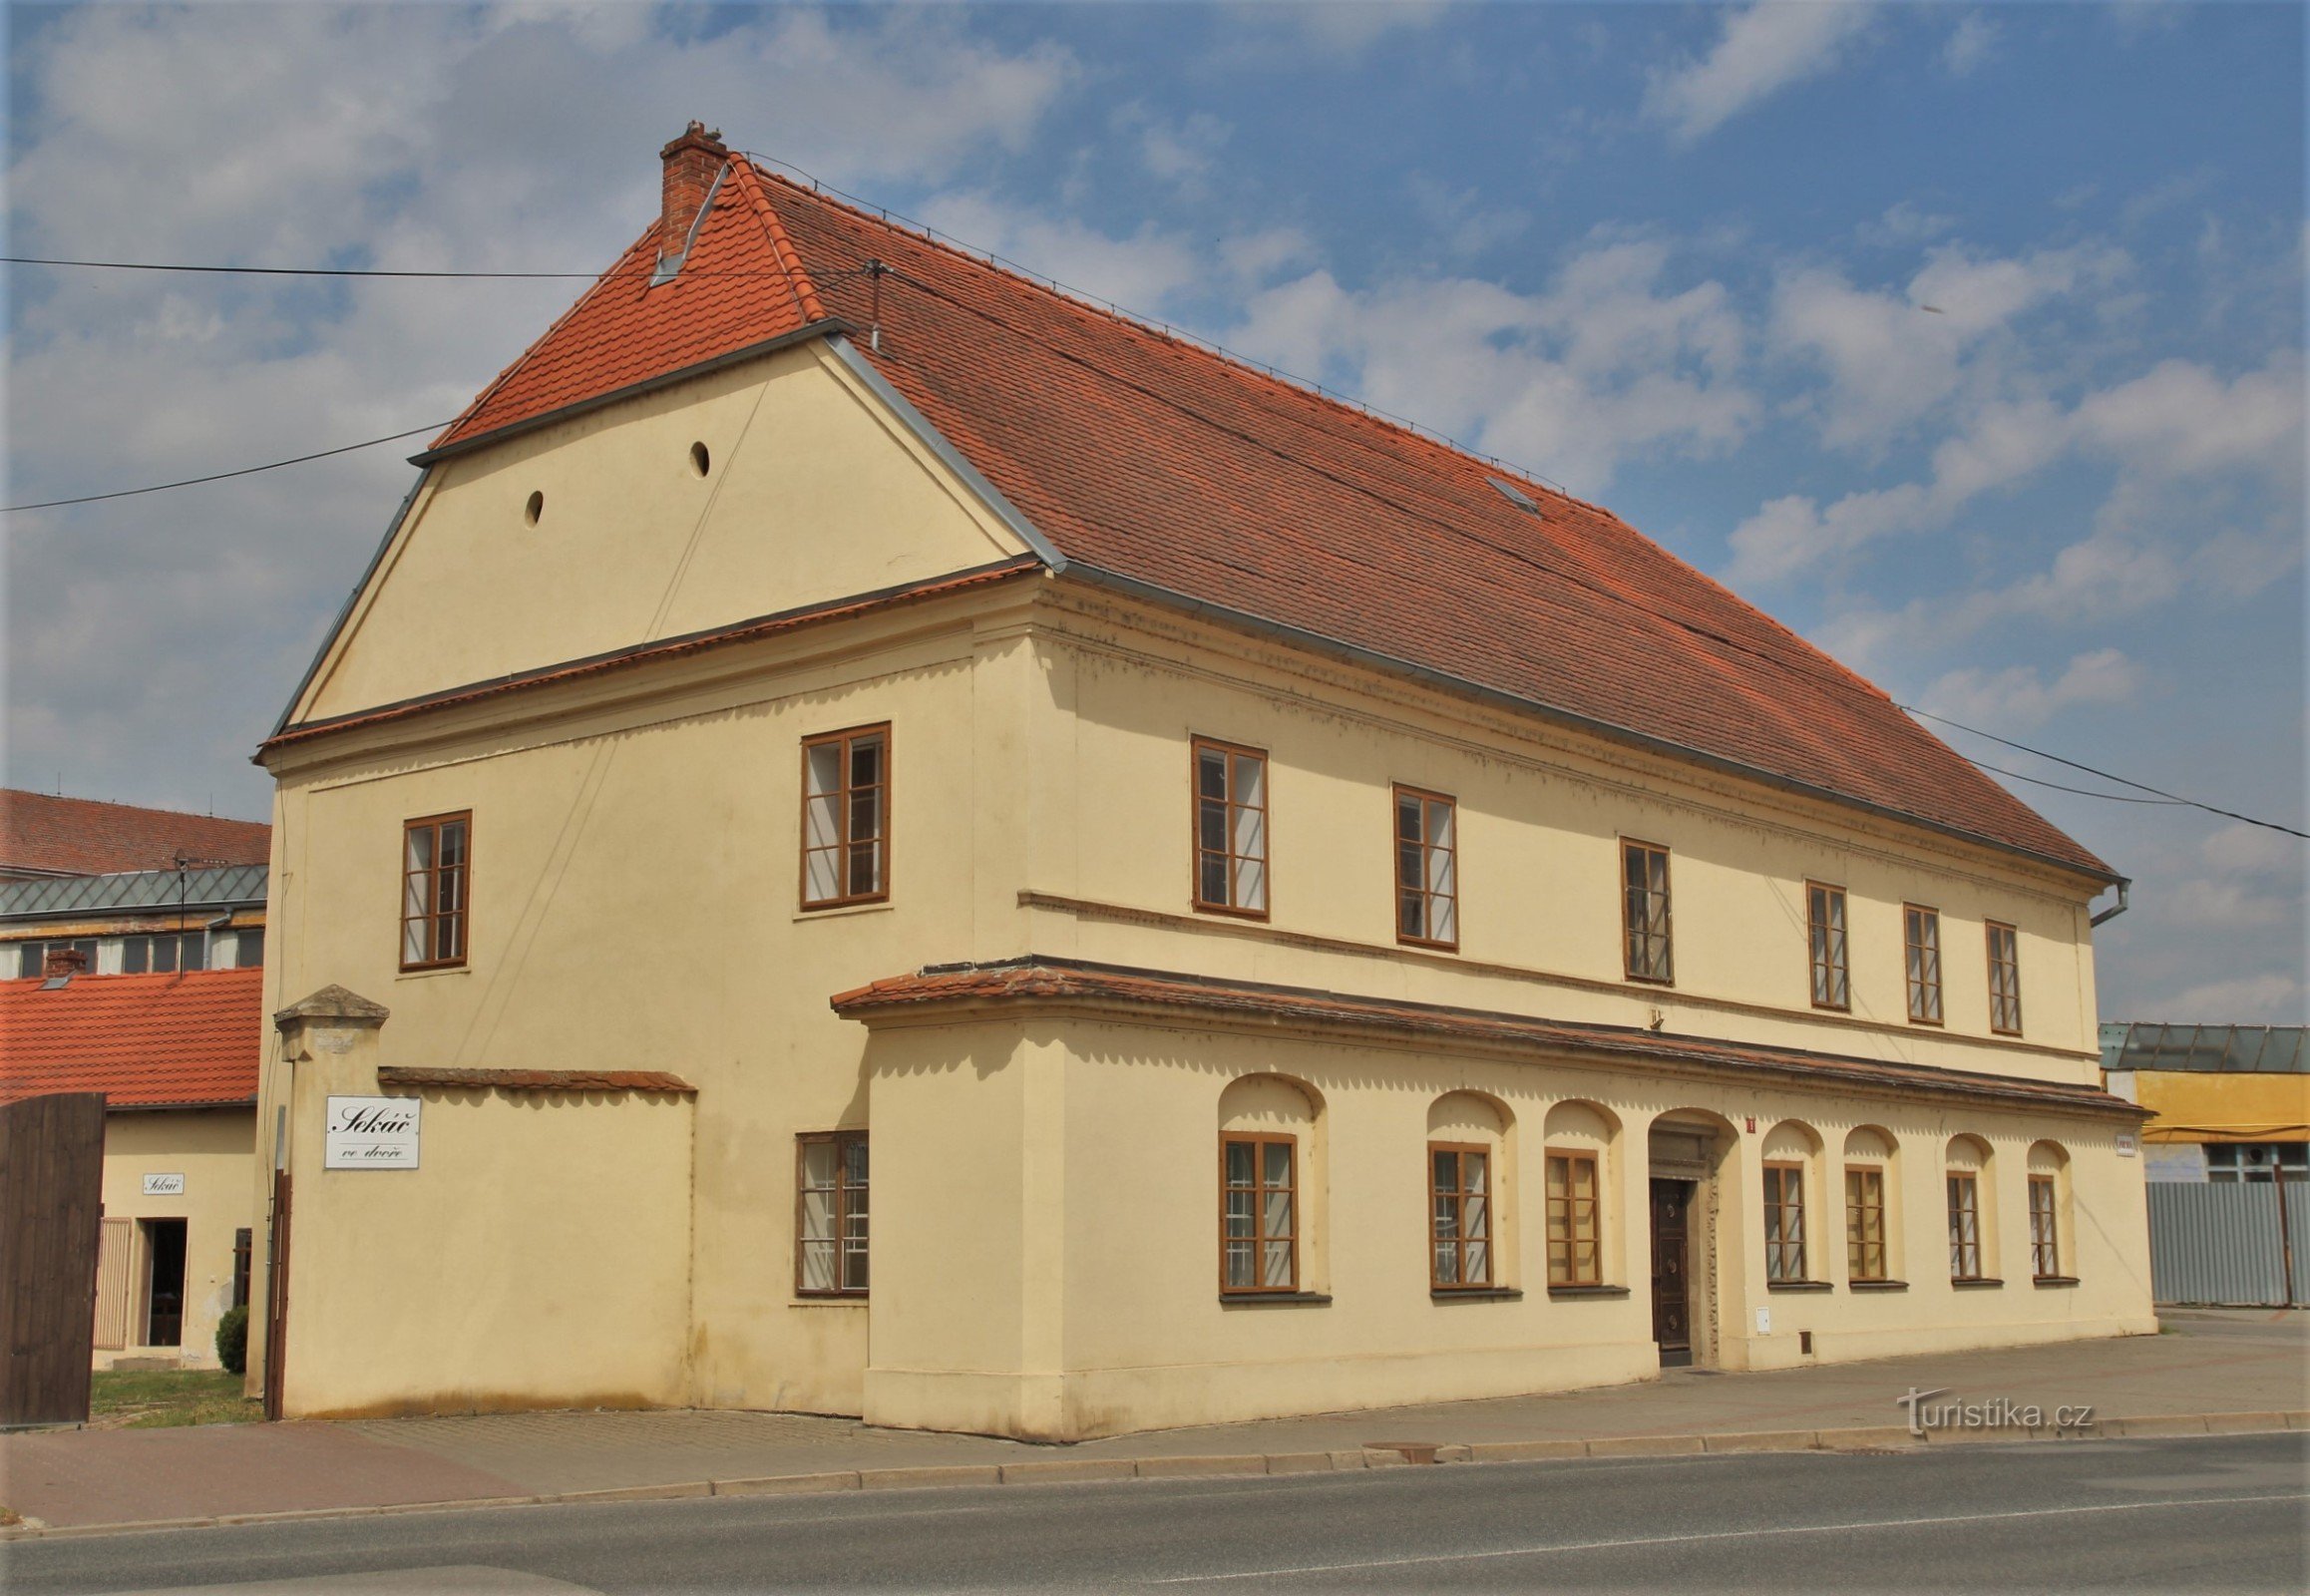 Ivančice - Náchod の領主の家